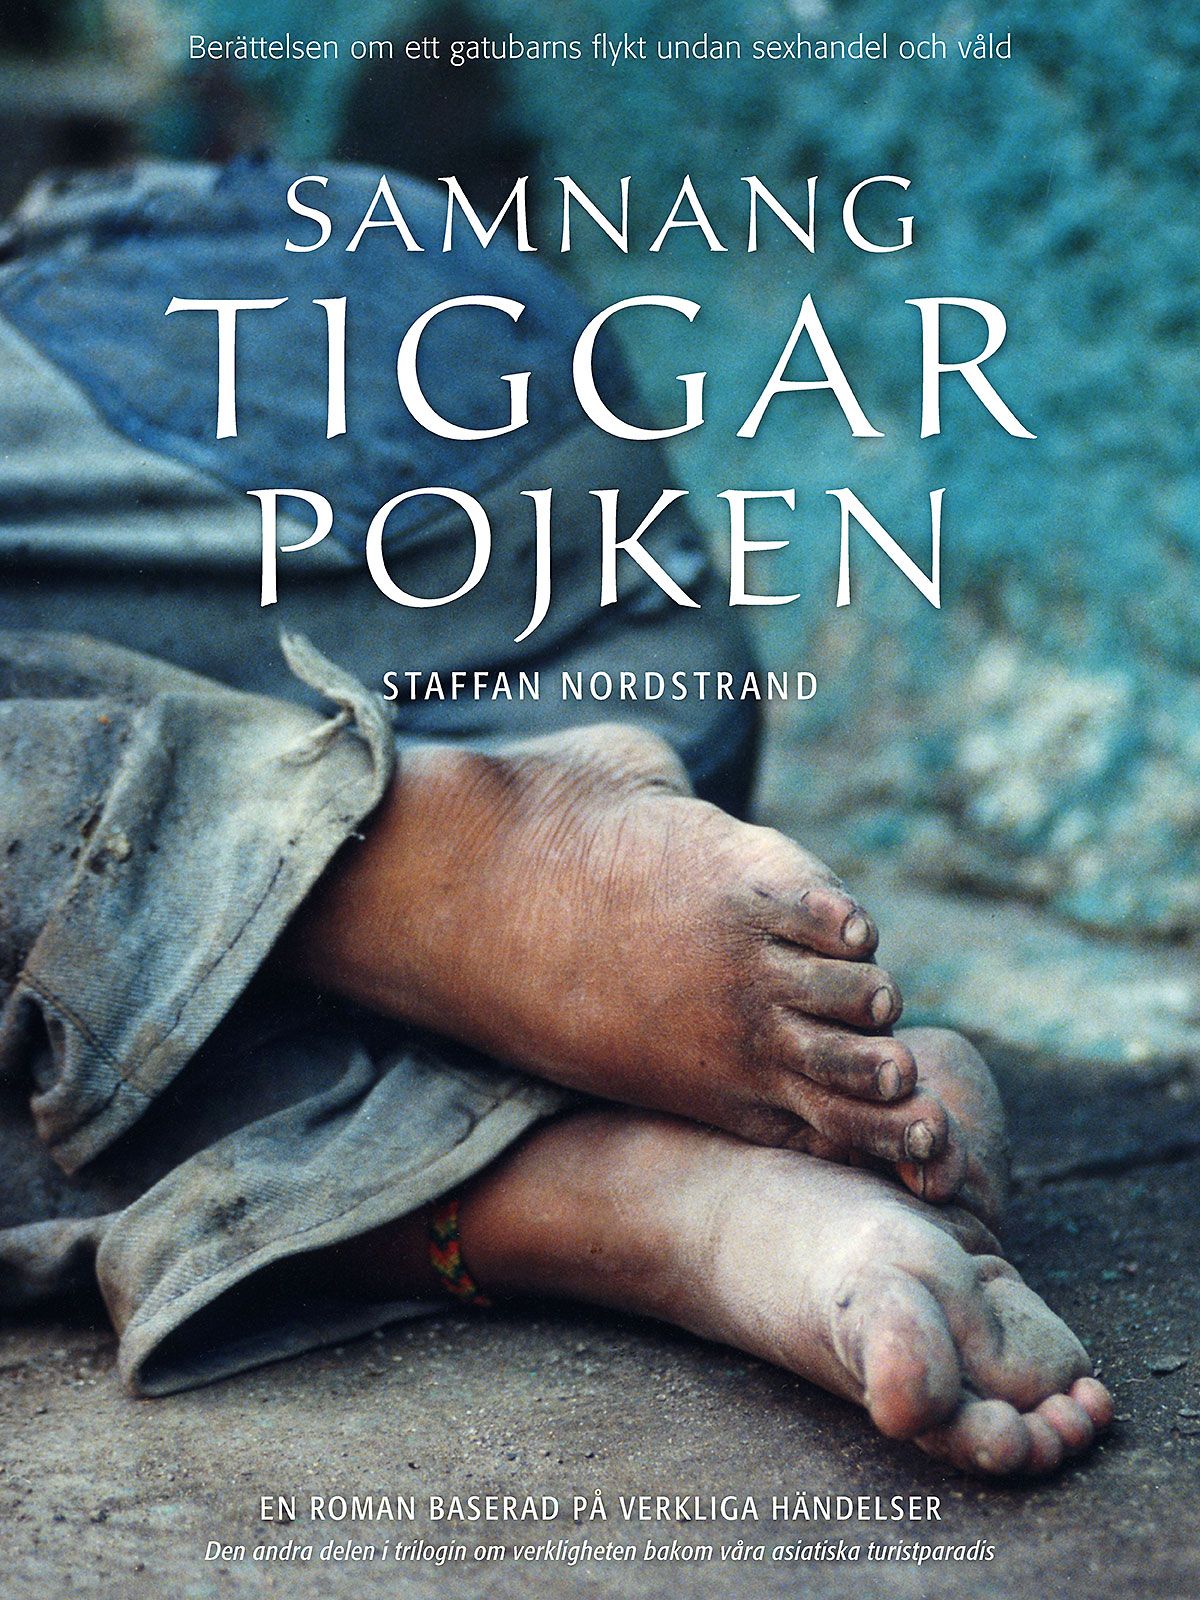 Samnang, tiggarpojken, e-bok av Staffan Nordstrand